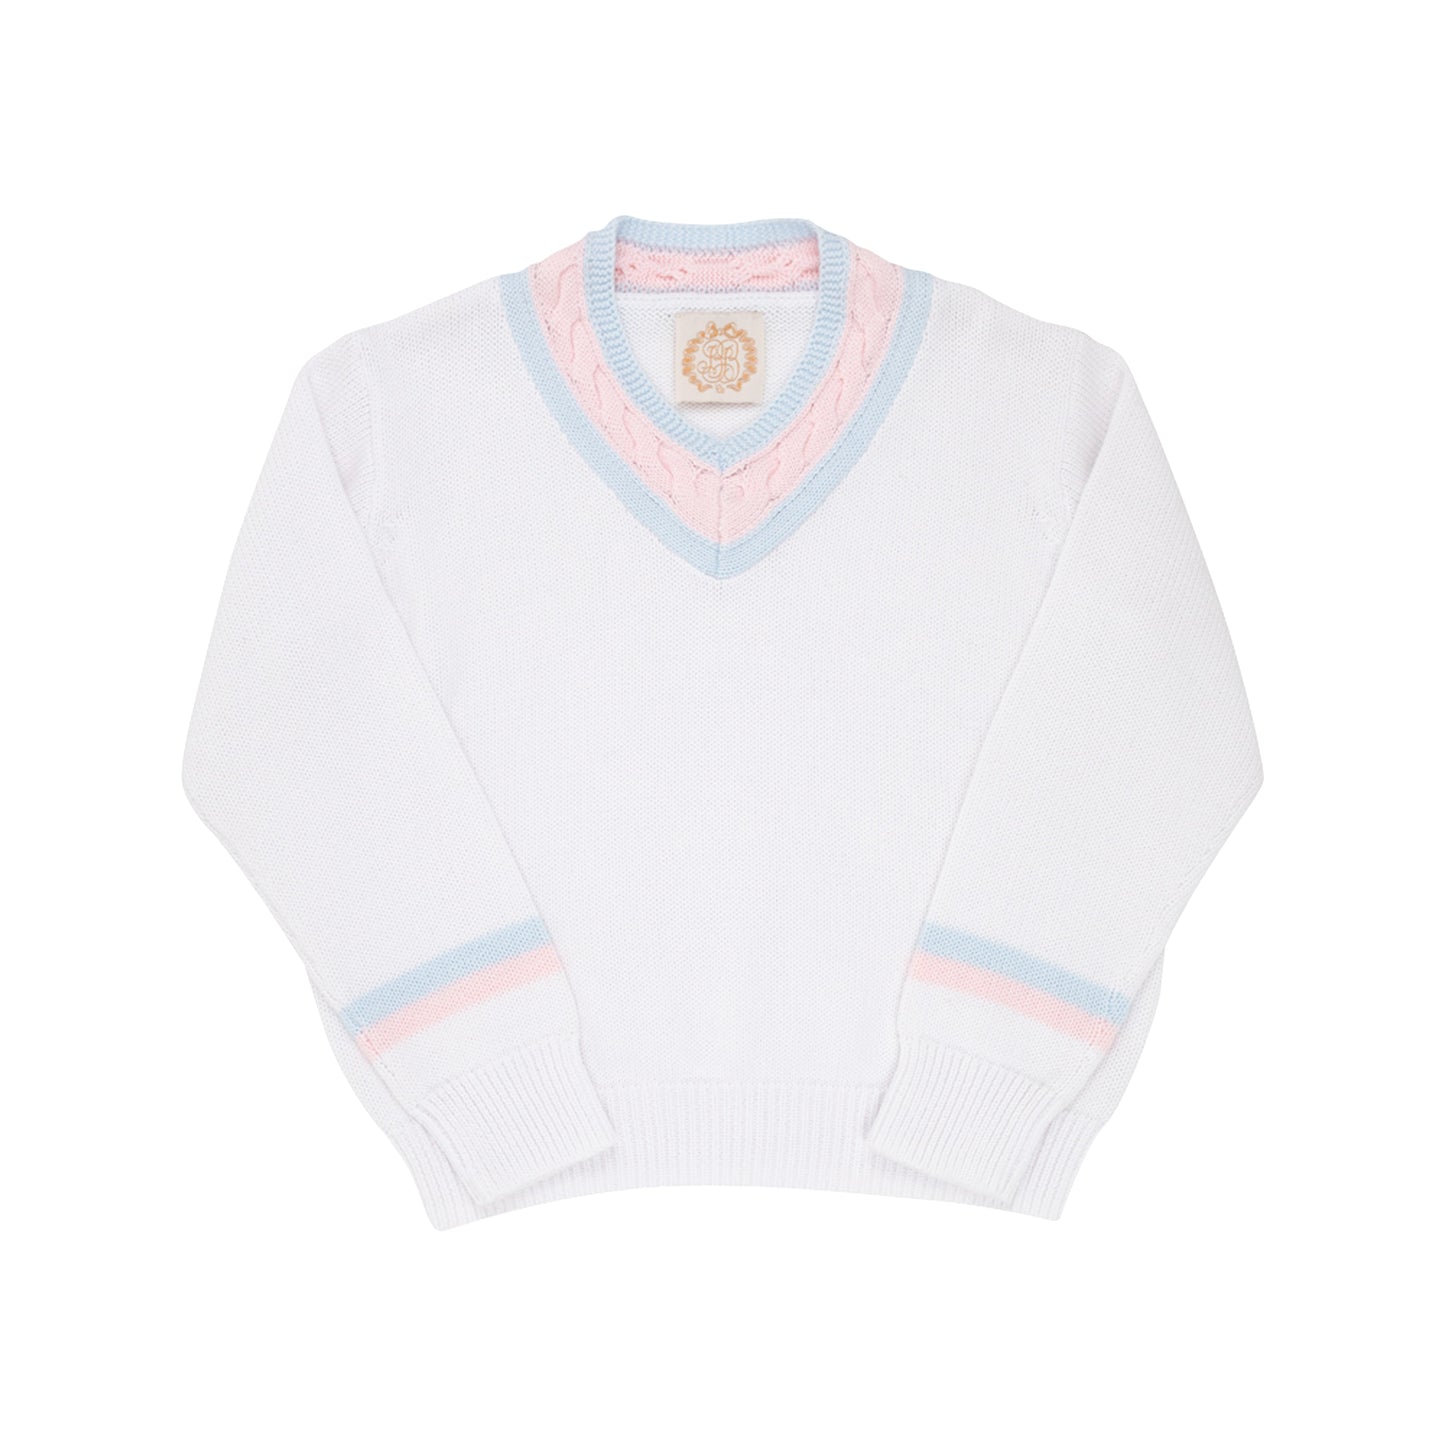 Vivie June V-Neck Sweater | Worth Avenue White With Buckhead Blue & Palm Beach Pink